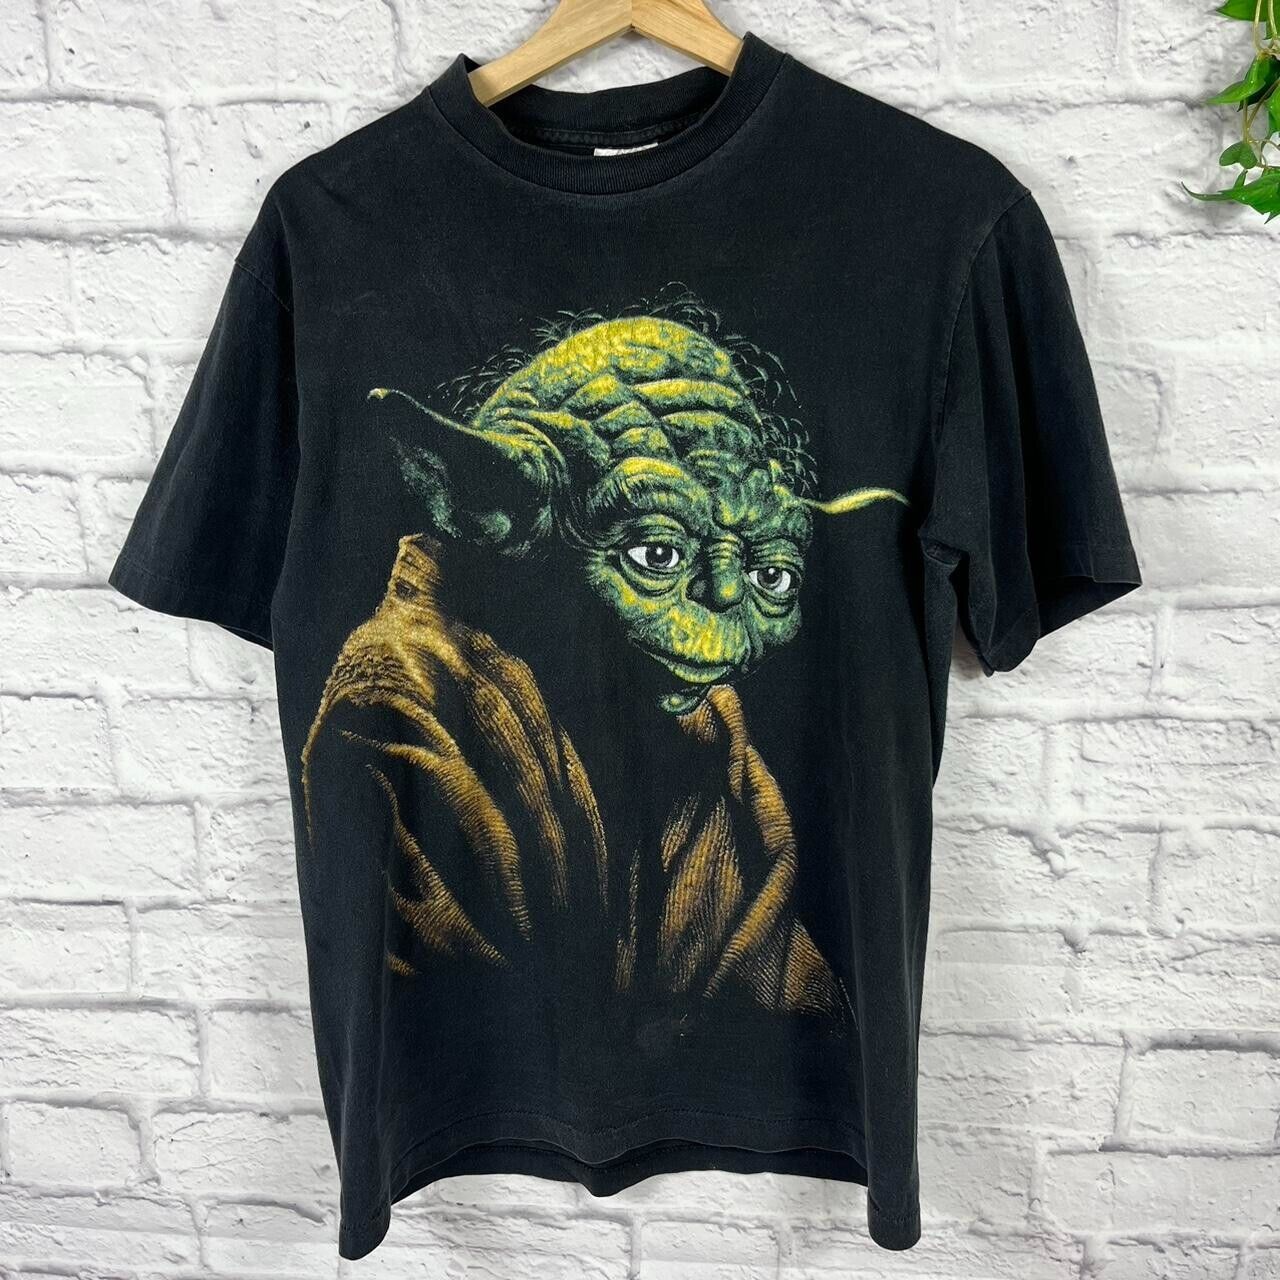 Vintage 90s Star Wars x Yoda Big face graphic t-shirt / tee